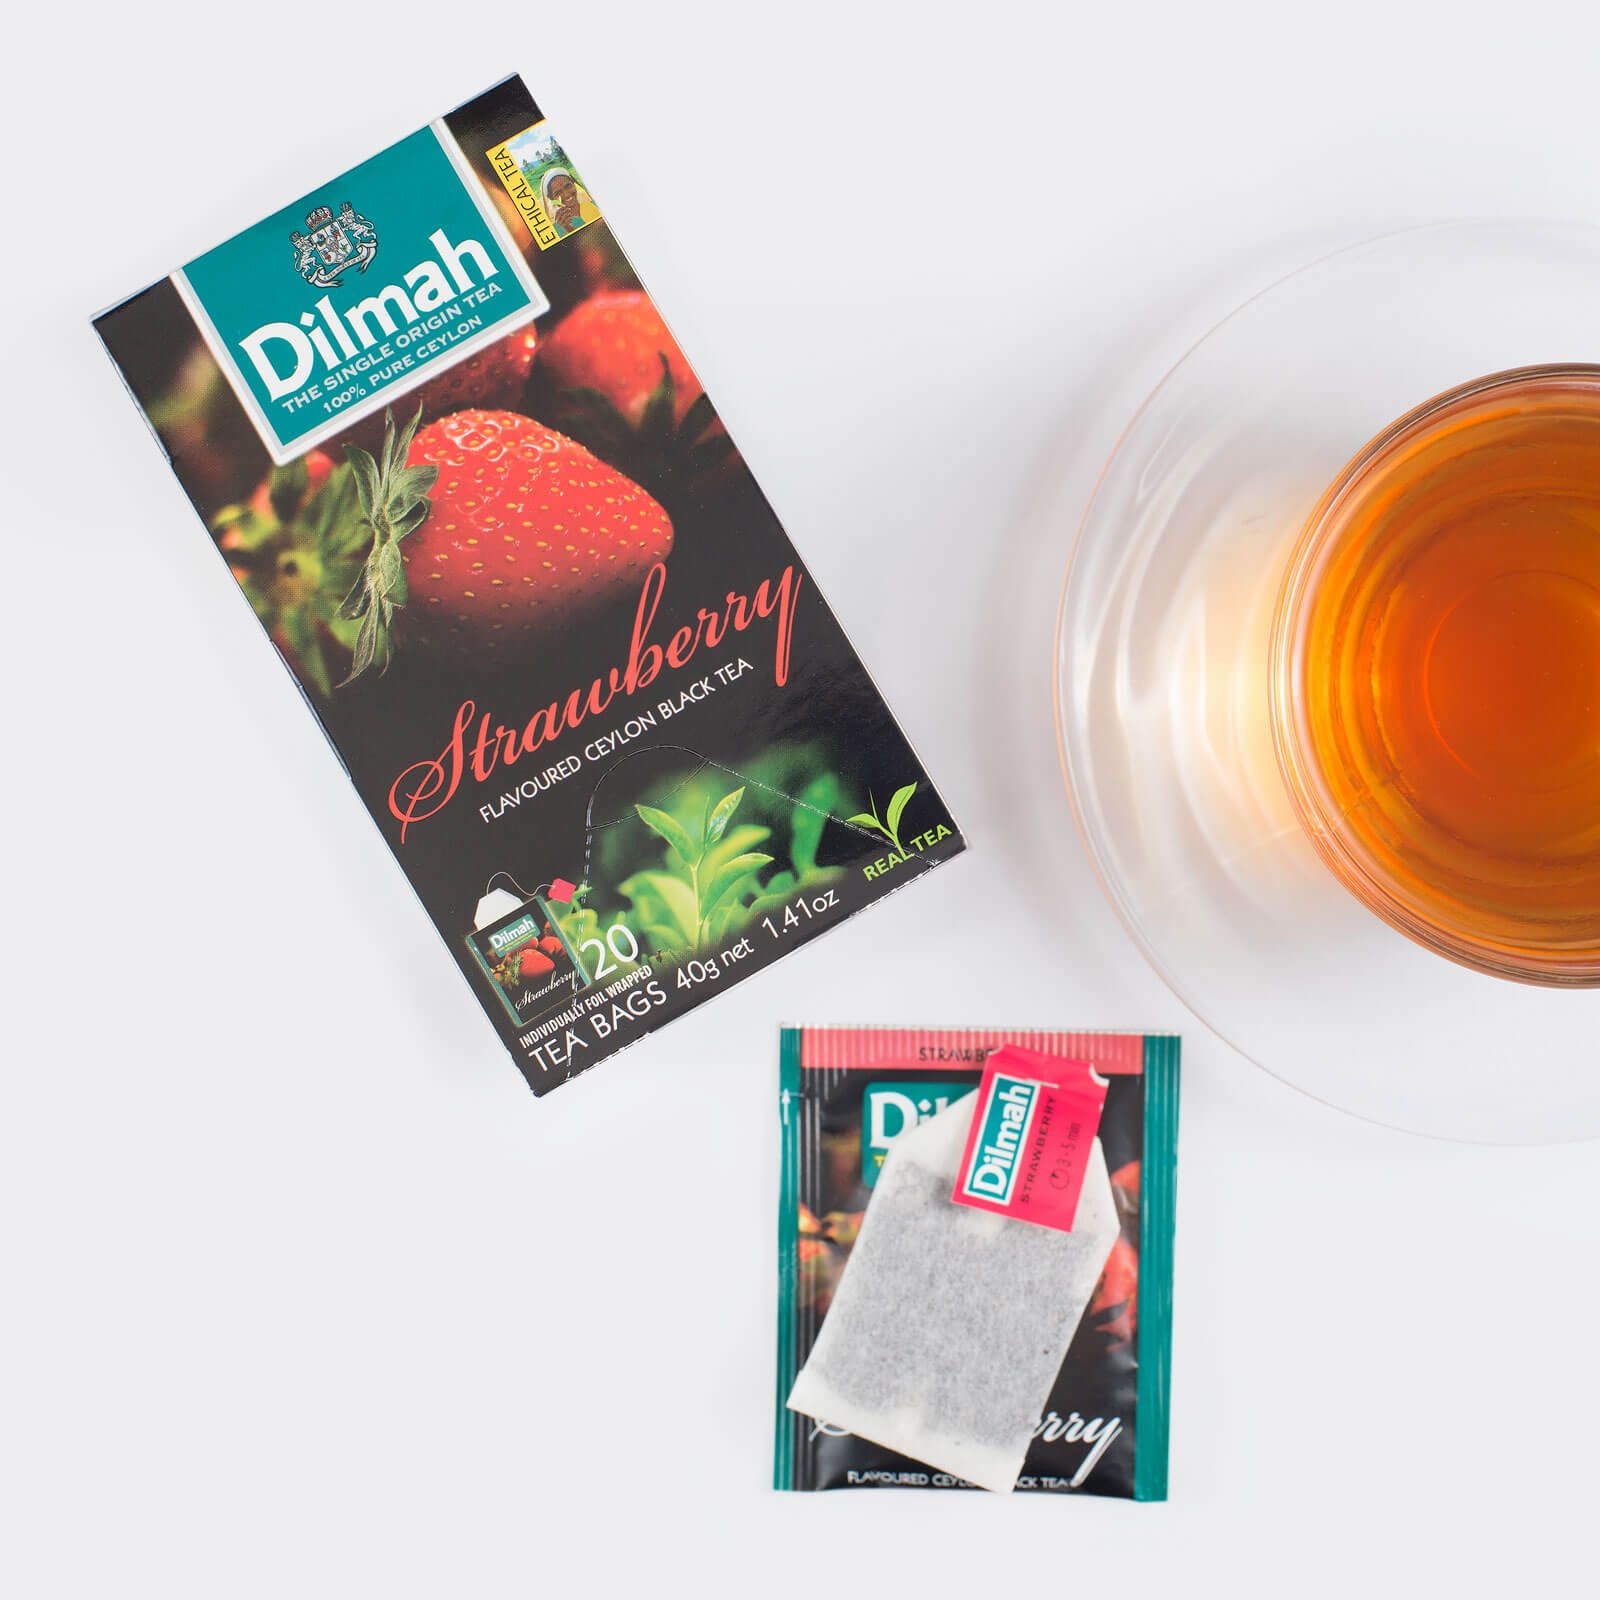 Dilmah Strawberry flavored Ceylon black tea